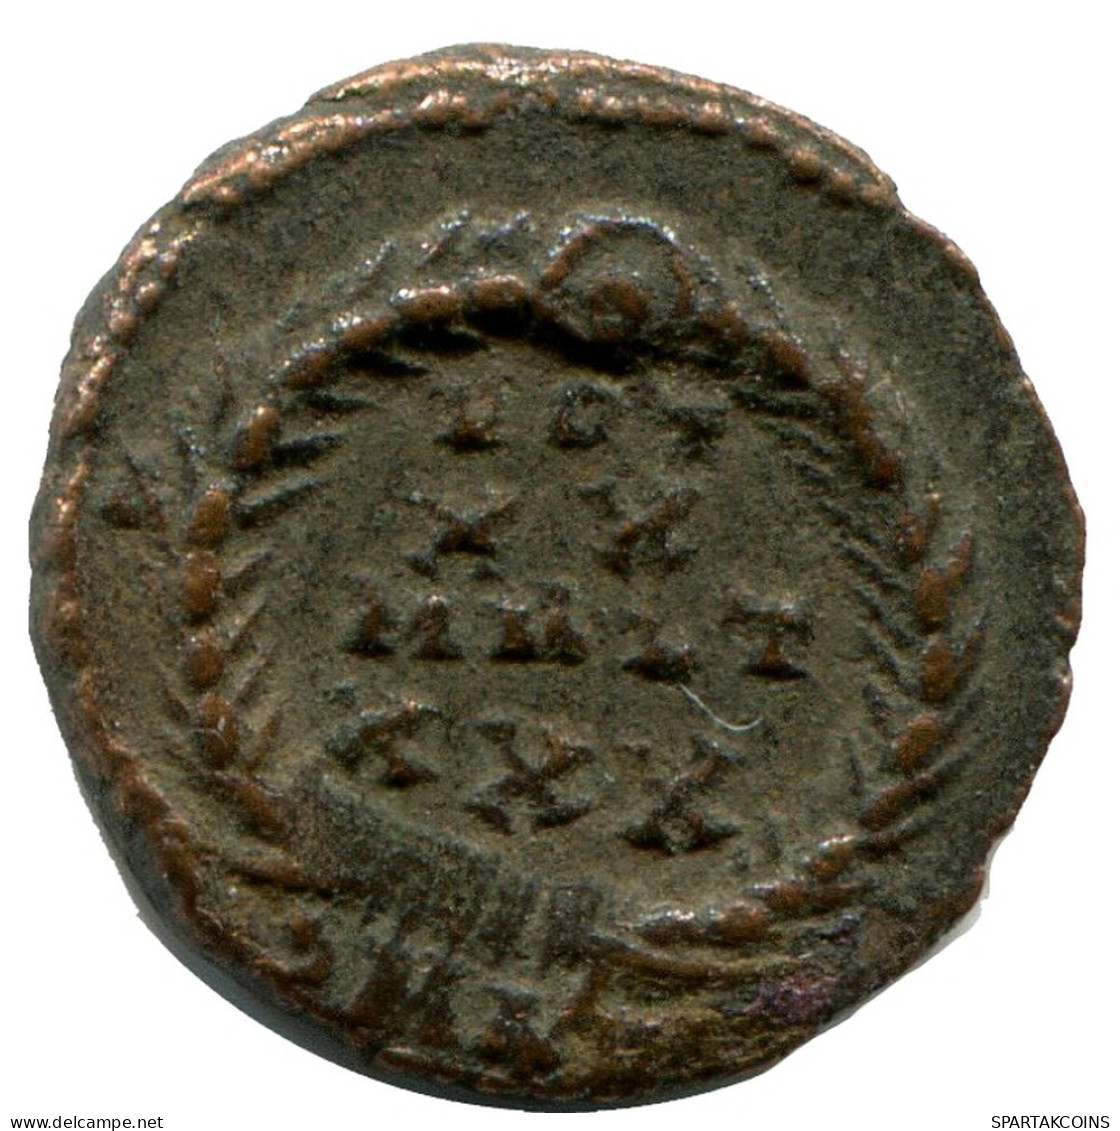 CONSTANTIUS II ALEKSANDRIA FROM THE ROYAL ONTARIO MUSEUM #ANC10497.14.U.A - El Impero Christiano (307 / 363)